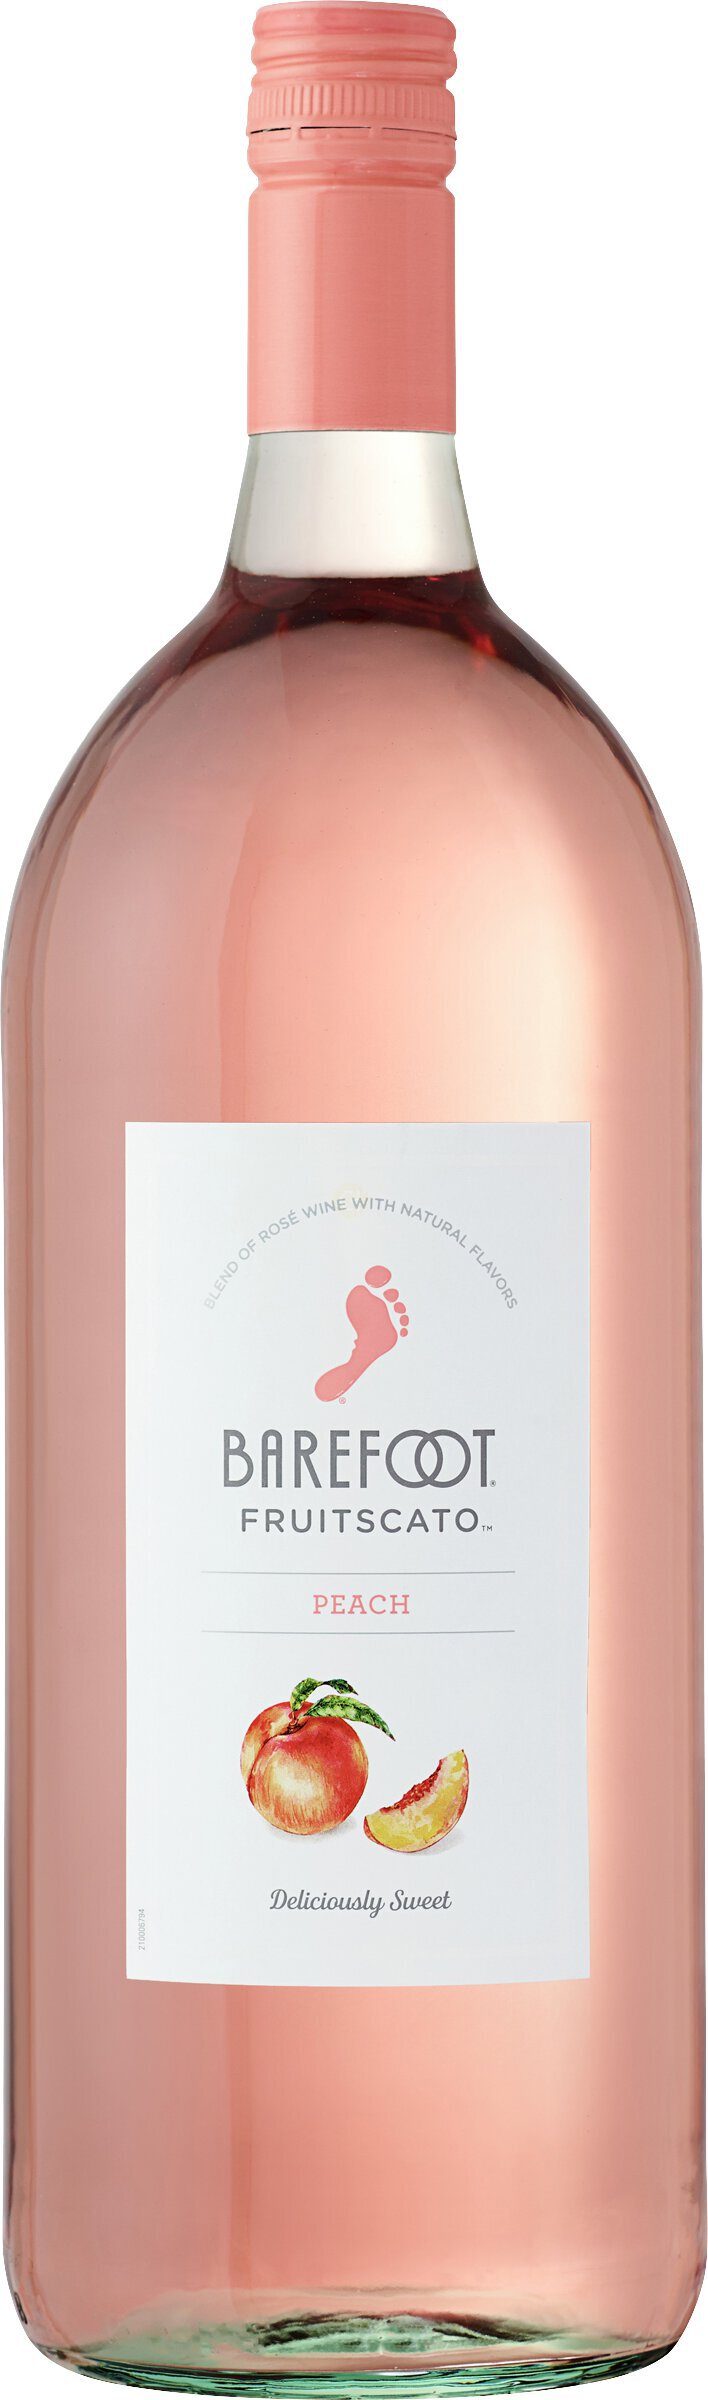 Barefoot Fruitscato Peach 750 ml